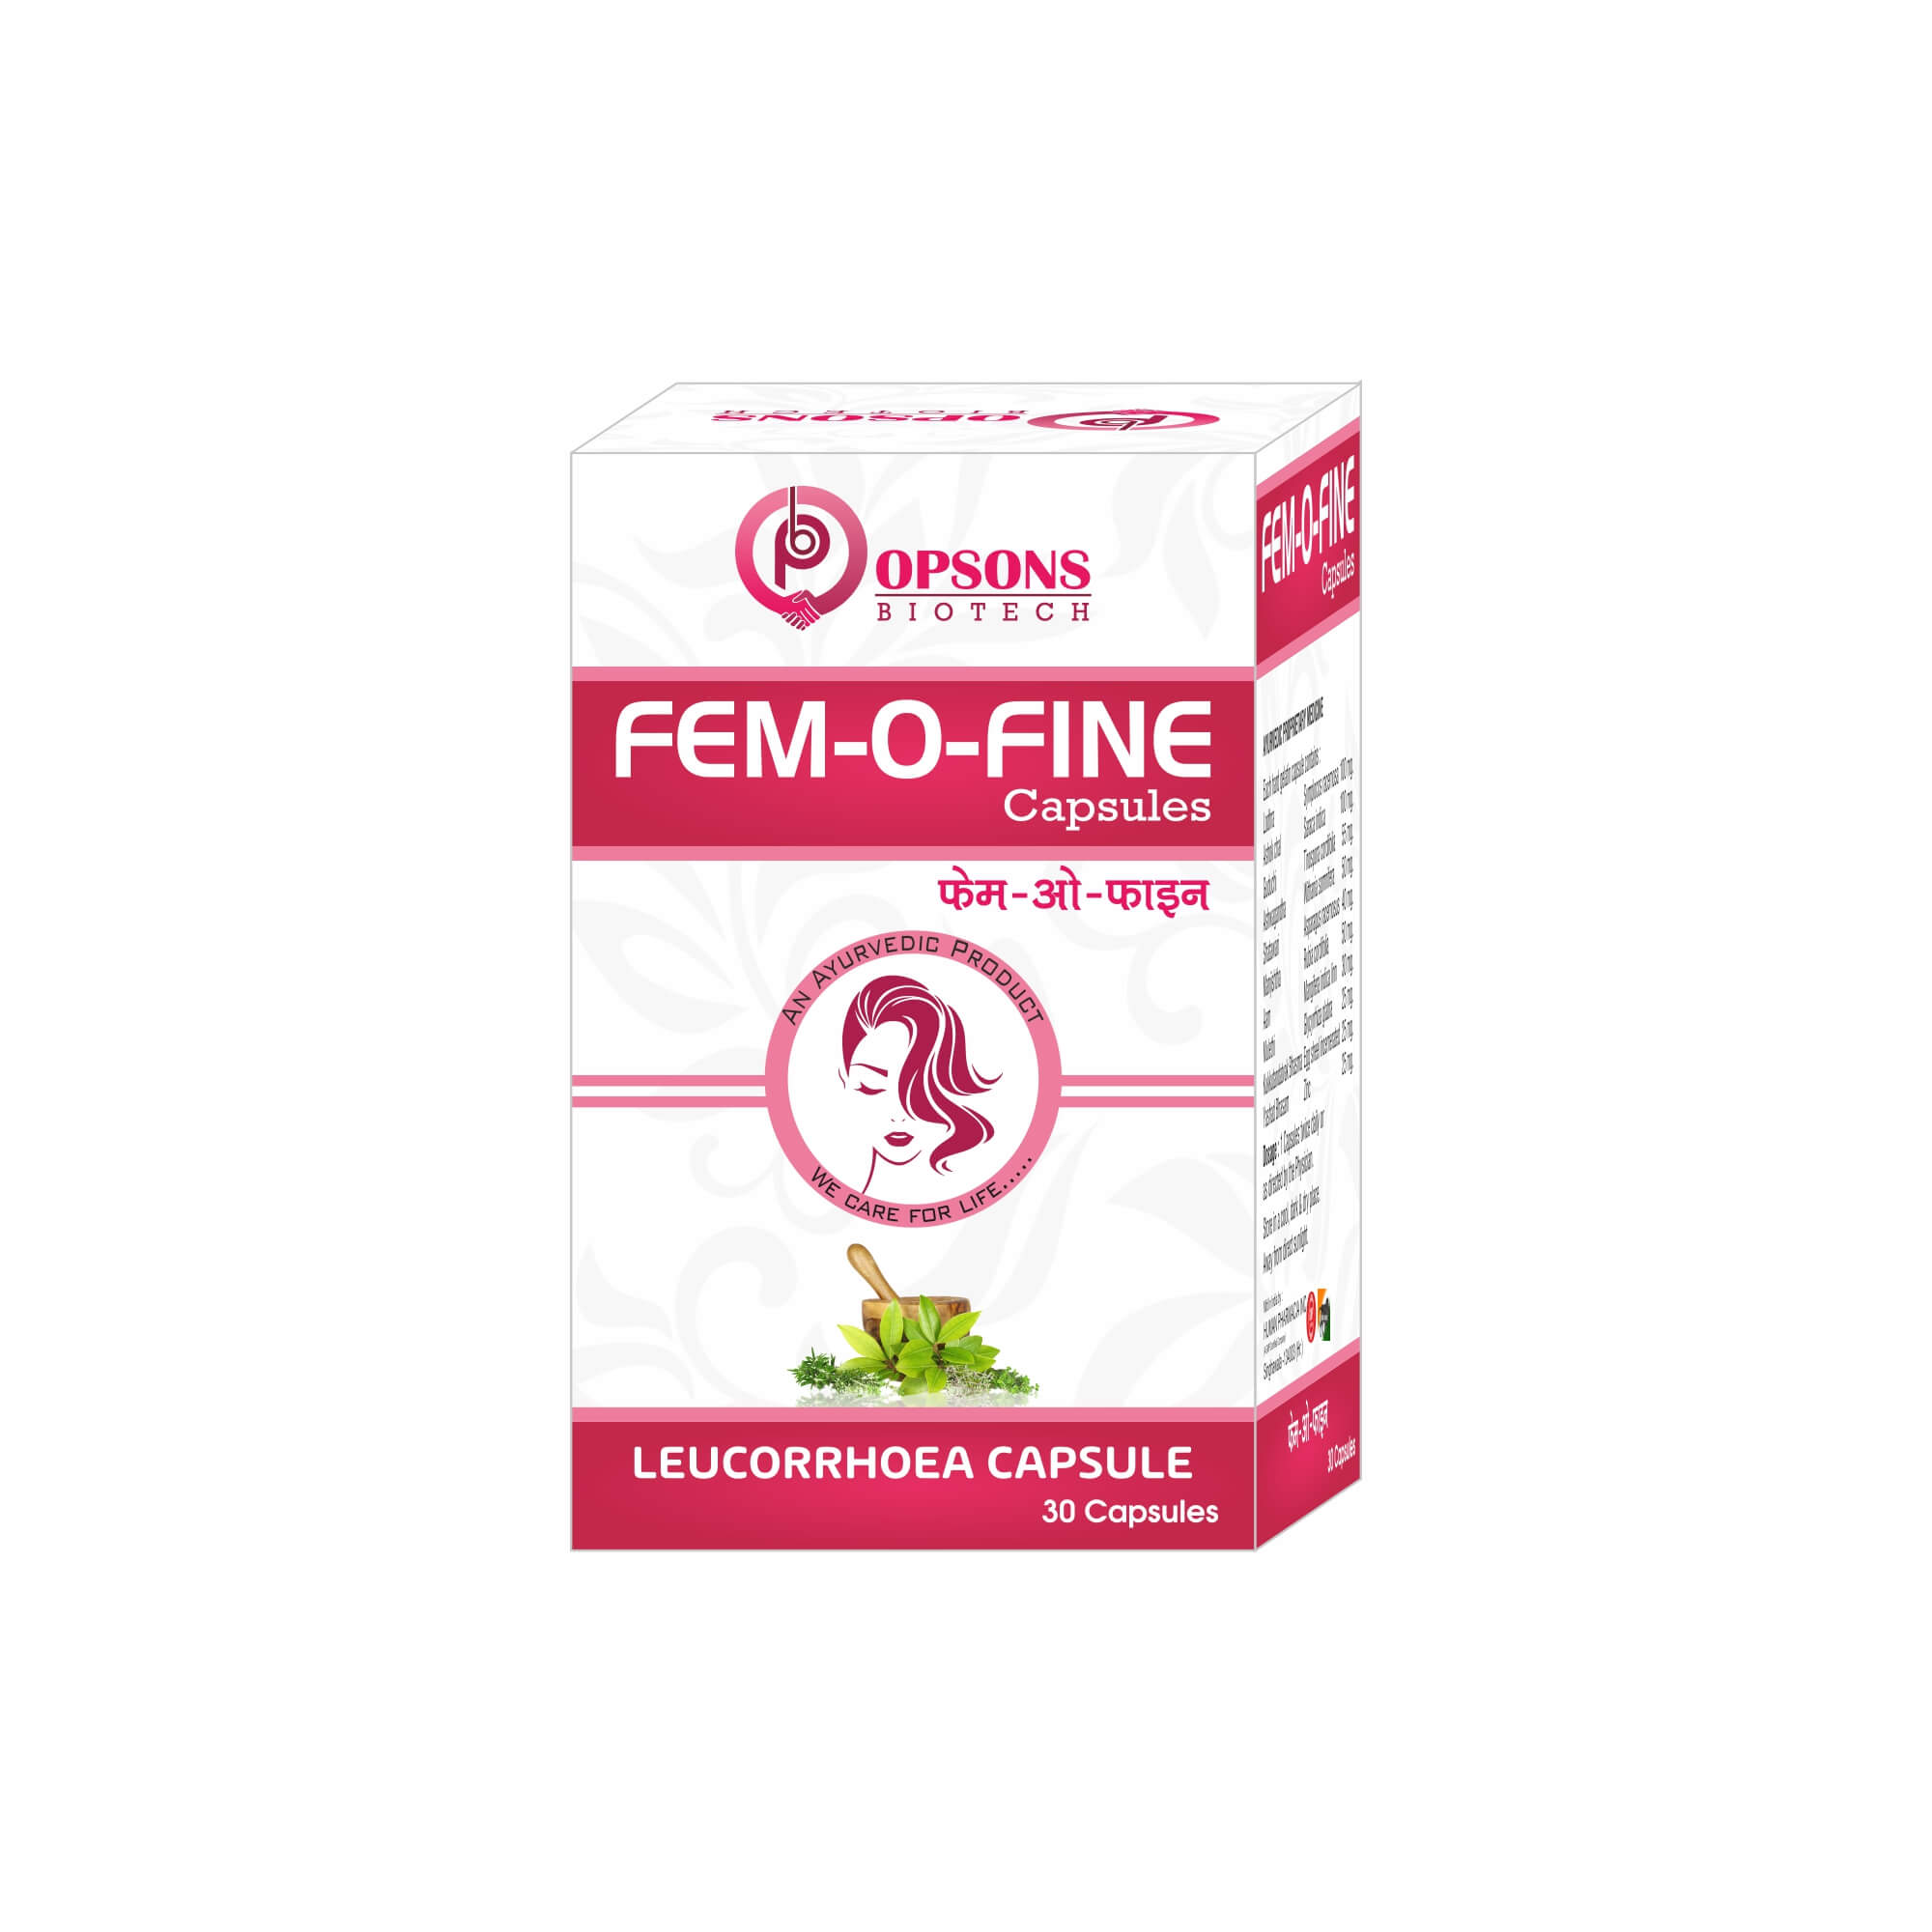 Product Name: Fem o Fine Capsules, Compositions of Fem o Fine Capsules are Leucorrhoea Capsules - Opsons Biotech